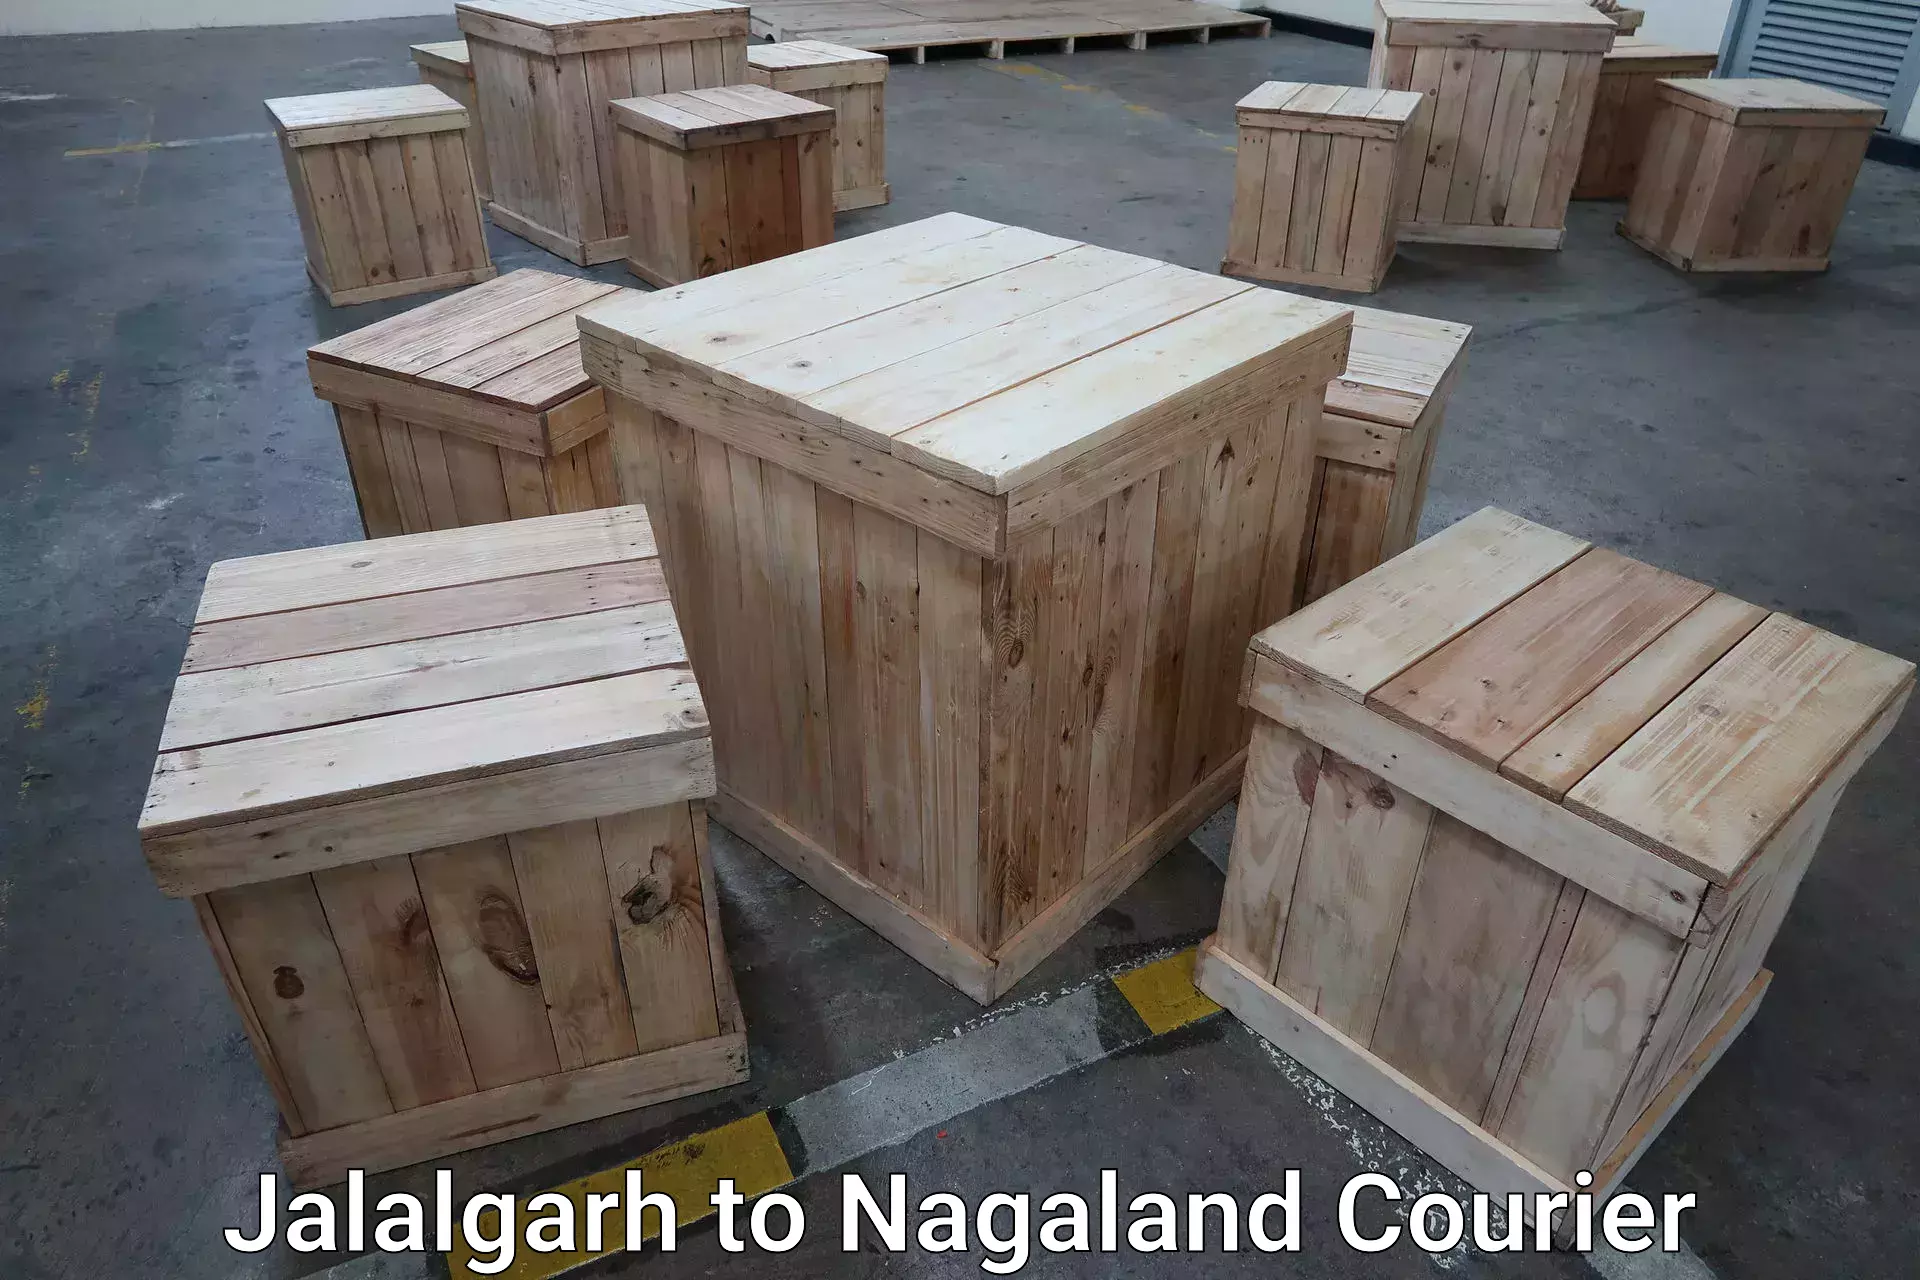 Baggage relocation service Jalalgarh to Nagaland